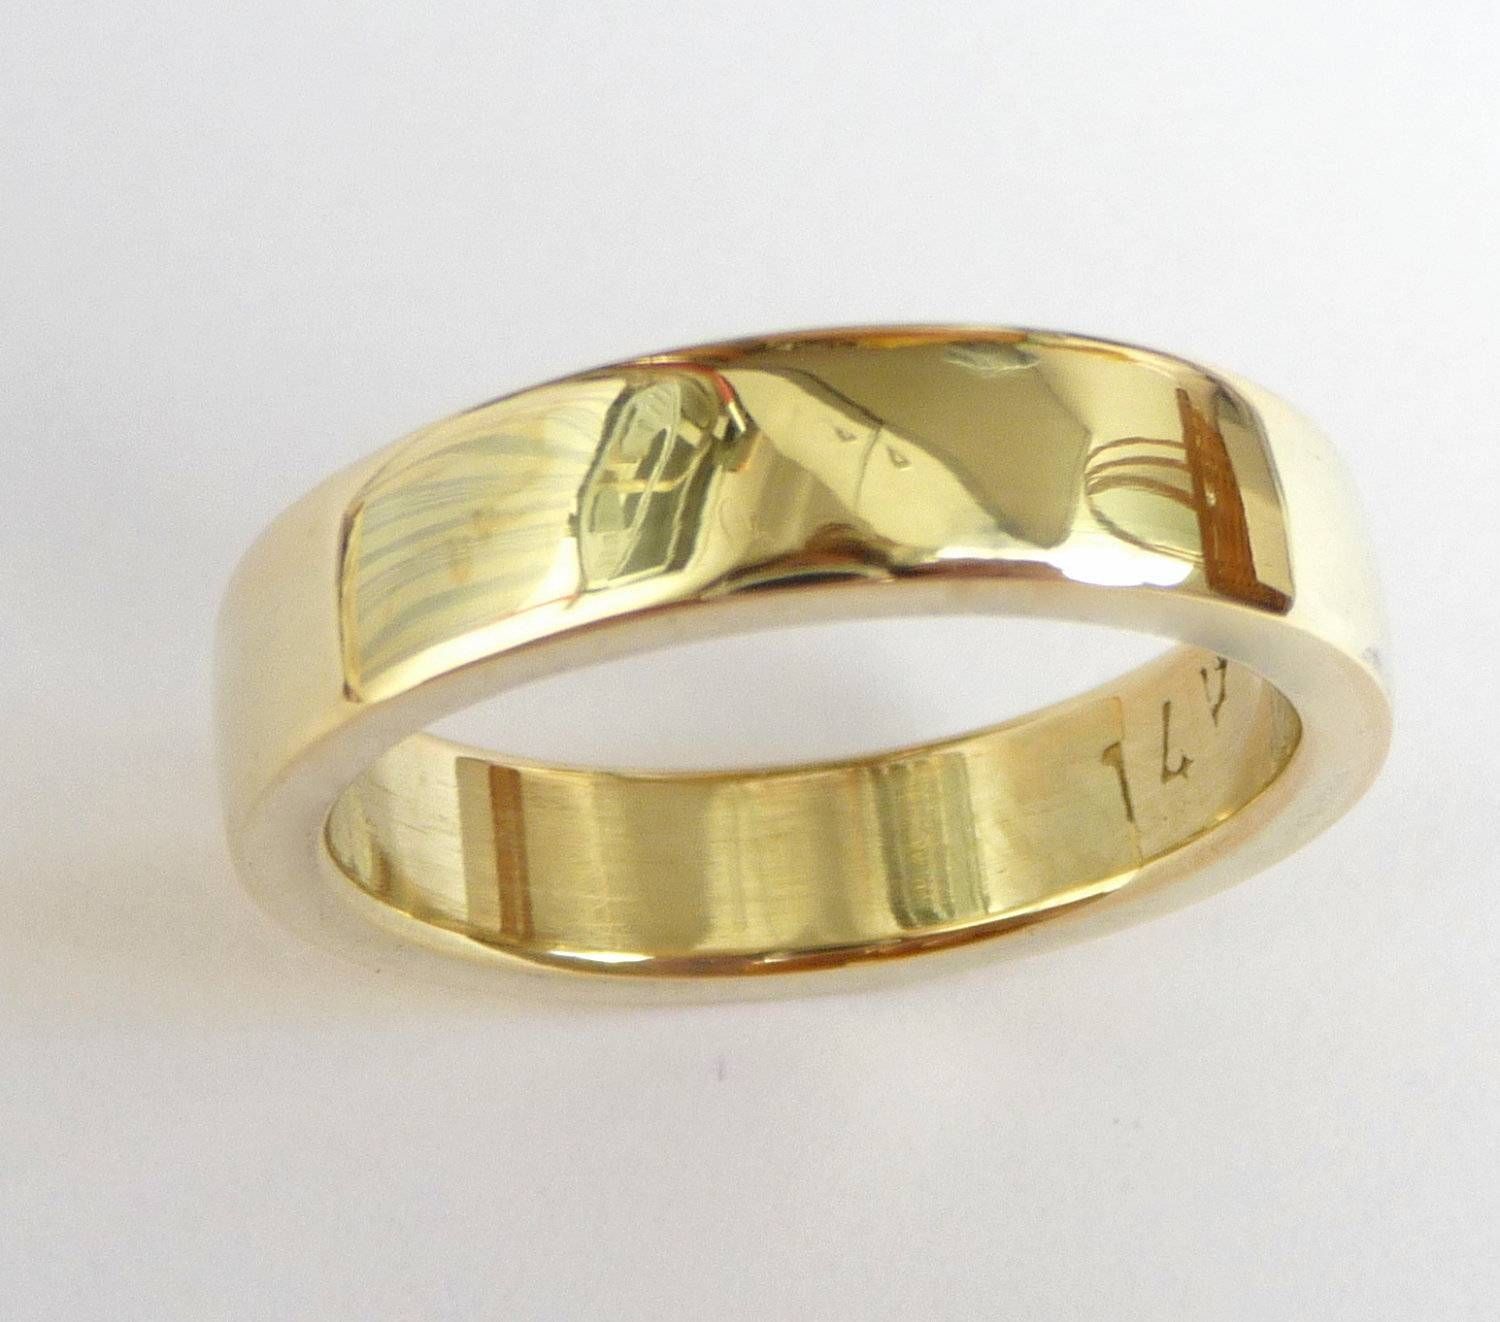 Wedding Rings For Men In Gold Amazing Design Ideas | Wedding Ring With Male Gold Wedding Rings (View 4 of 15)